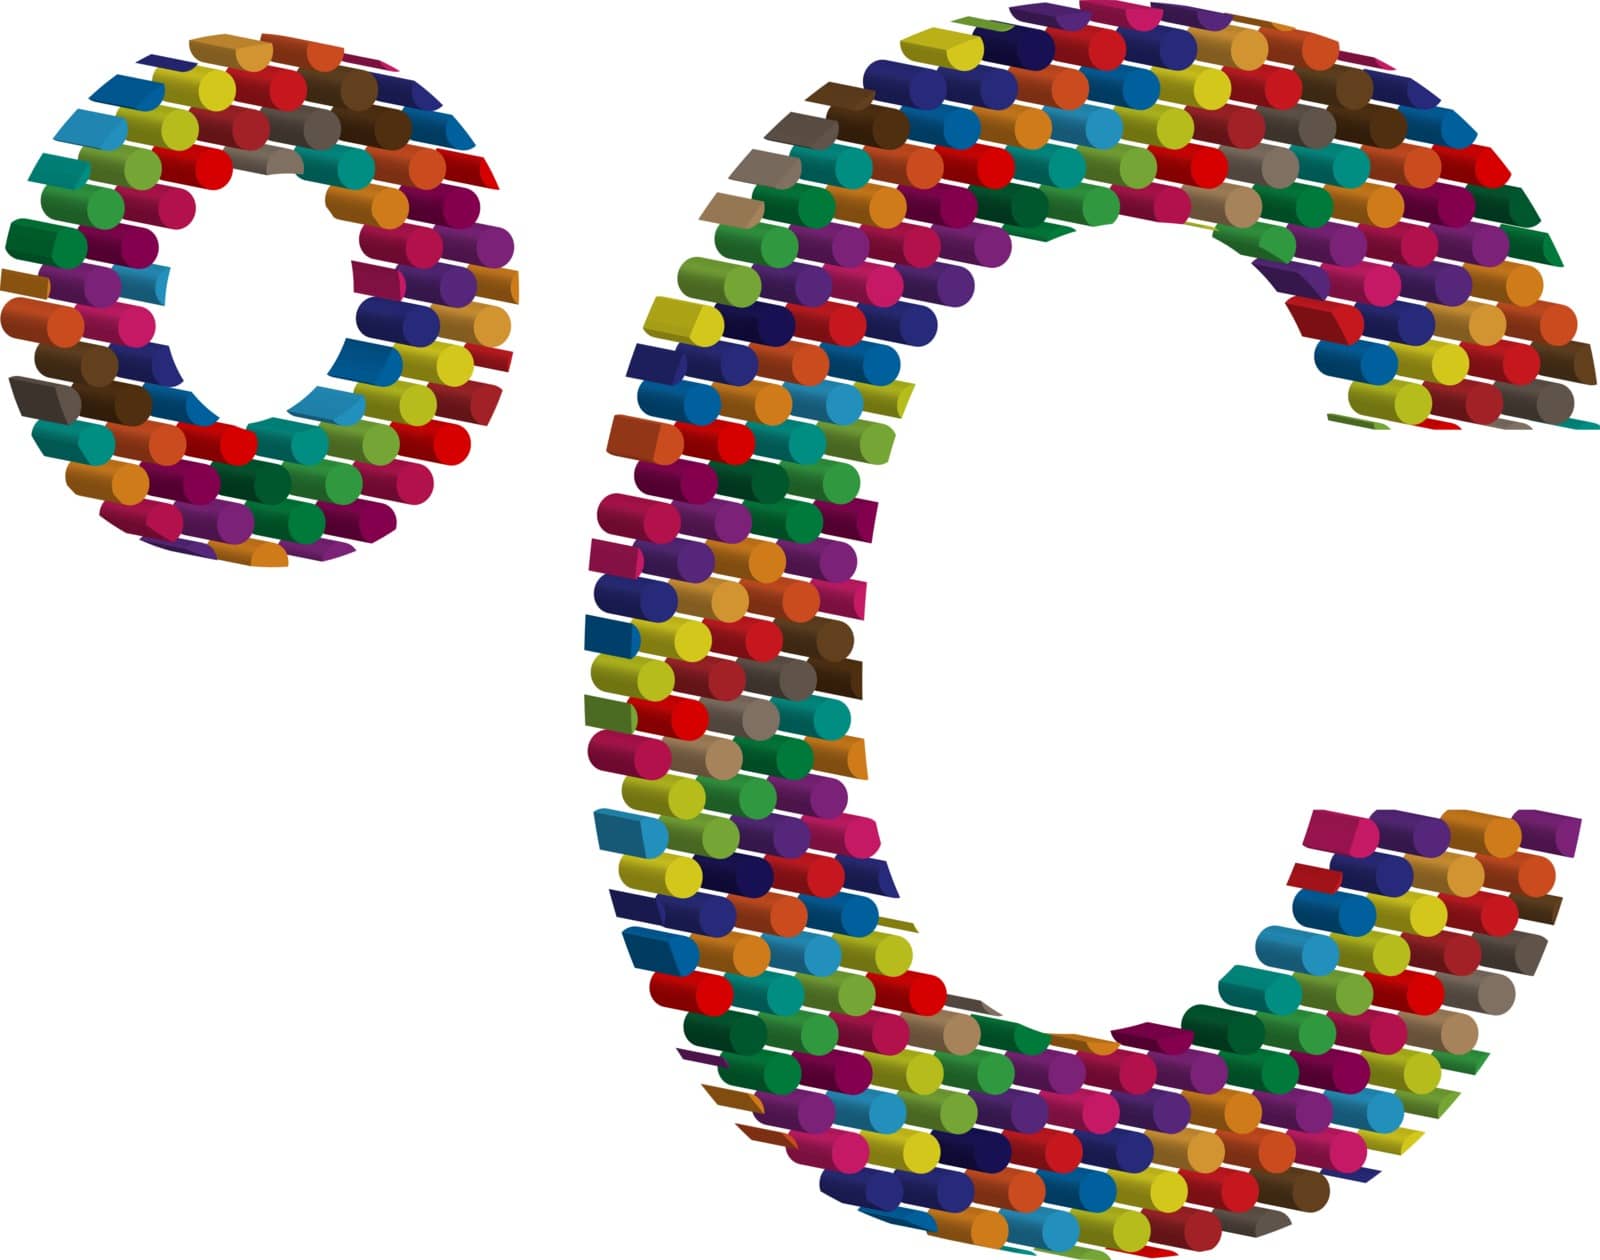 Colorful three-dimensional symbol by aroas